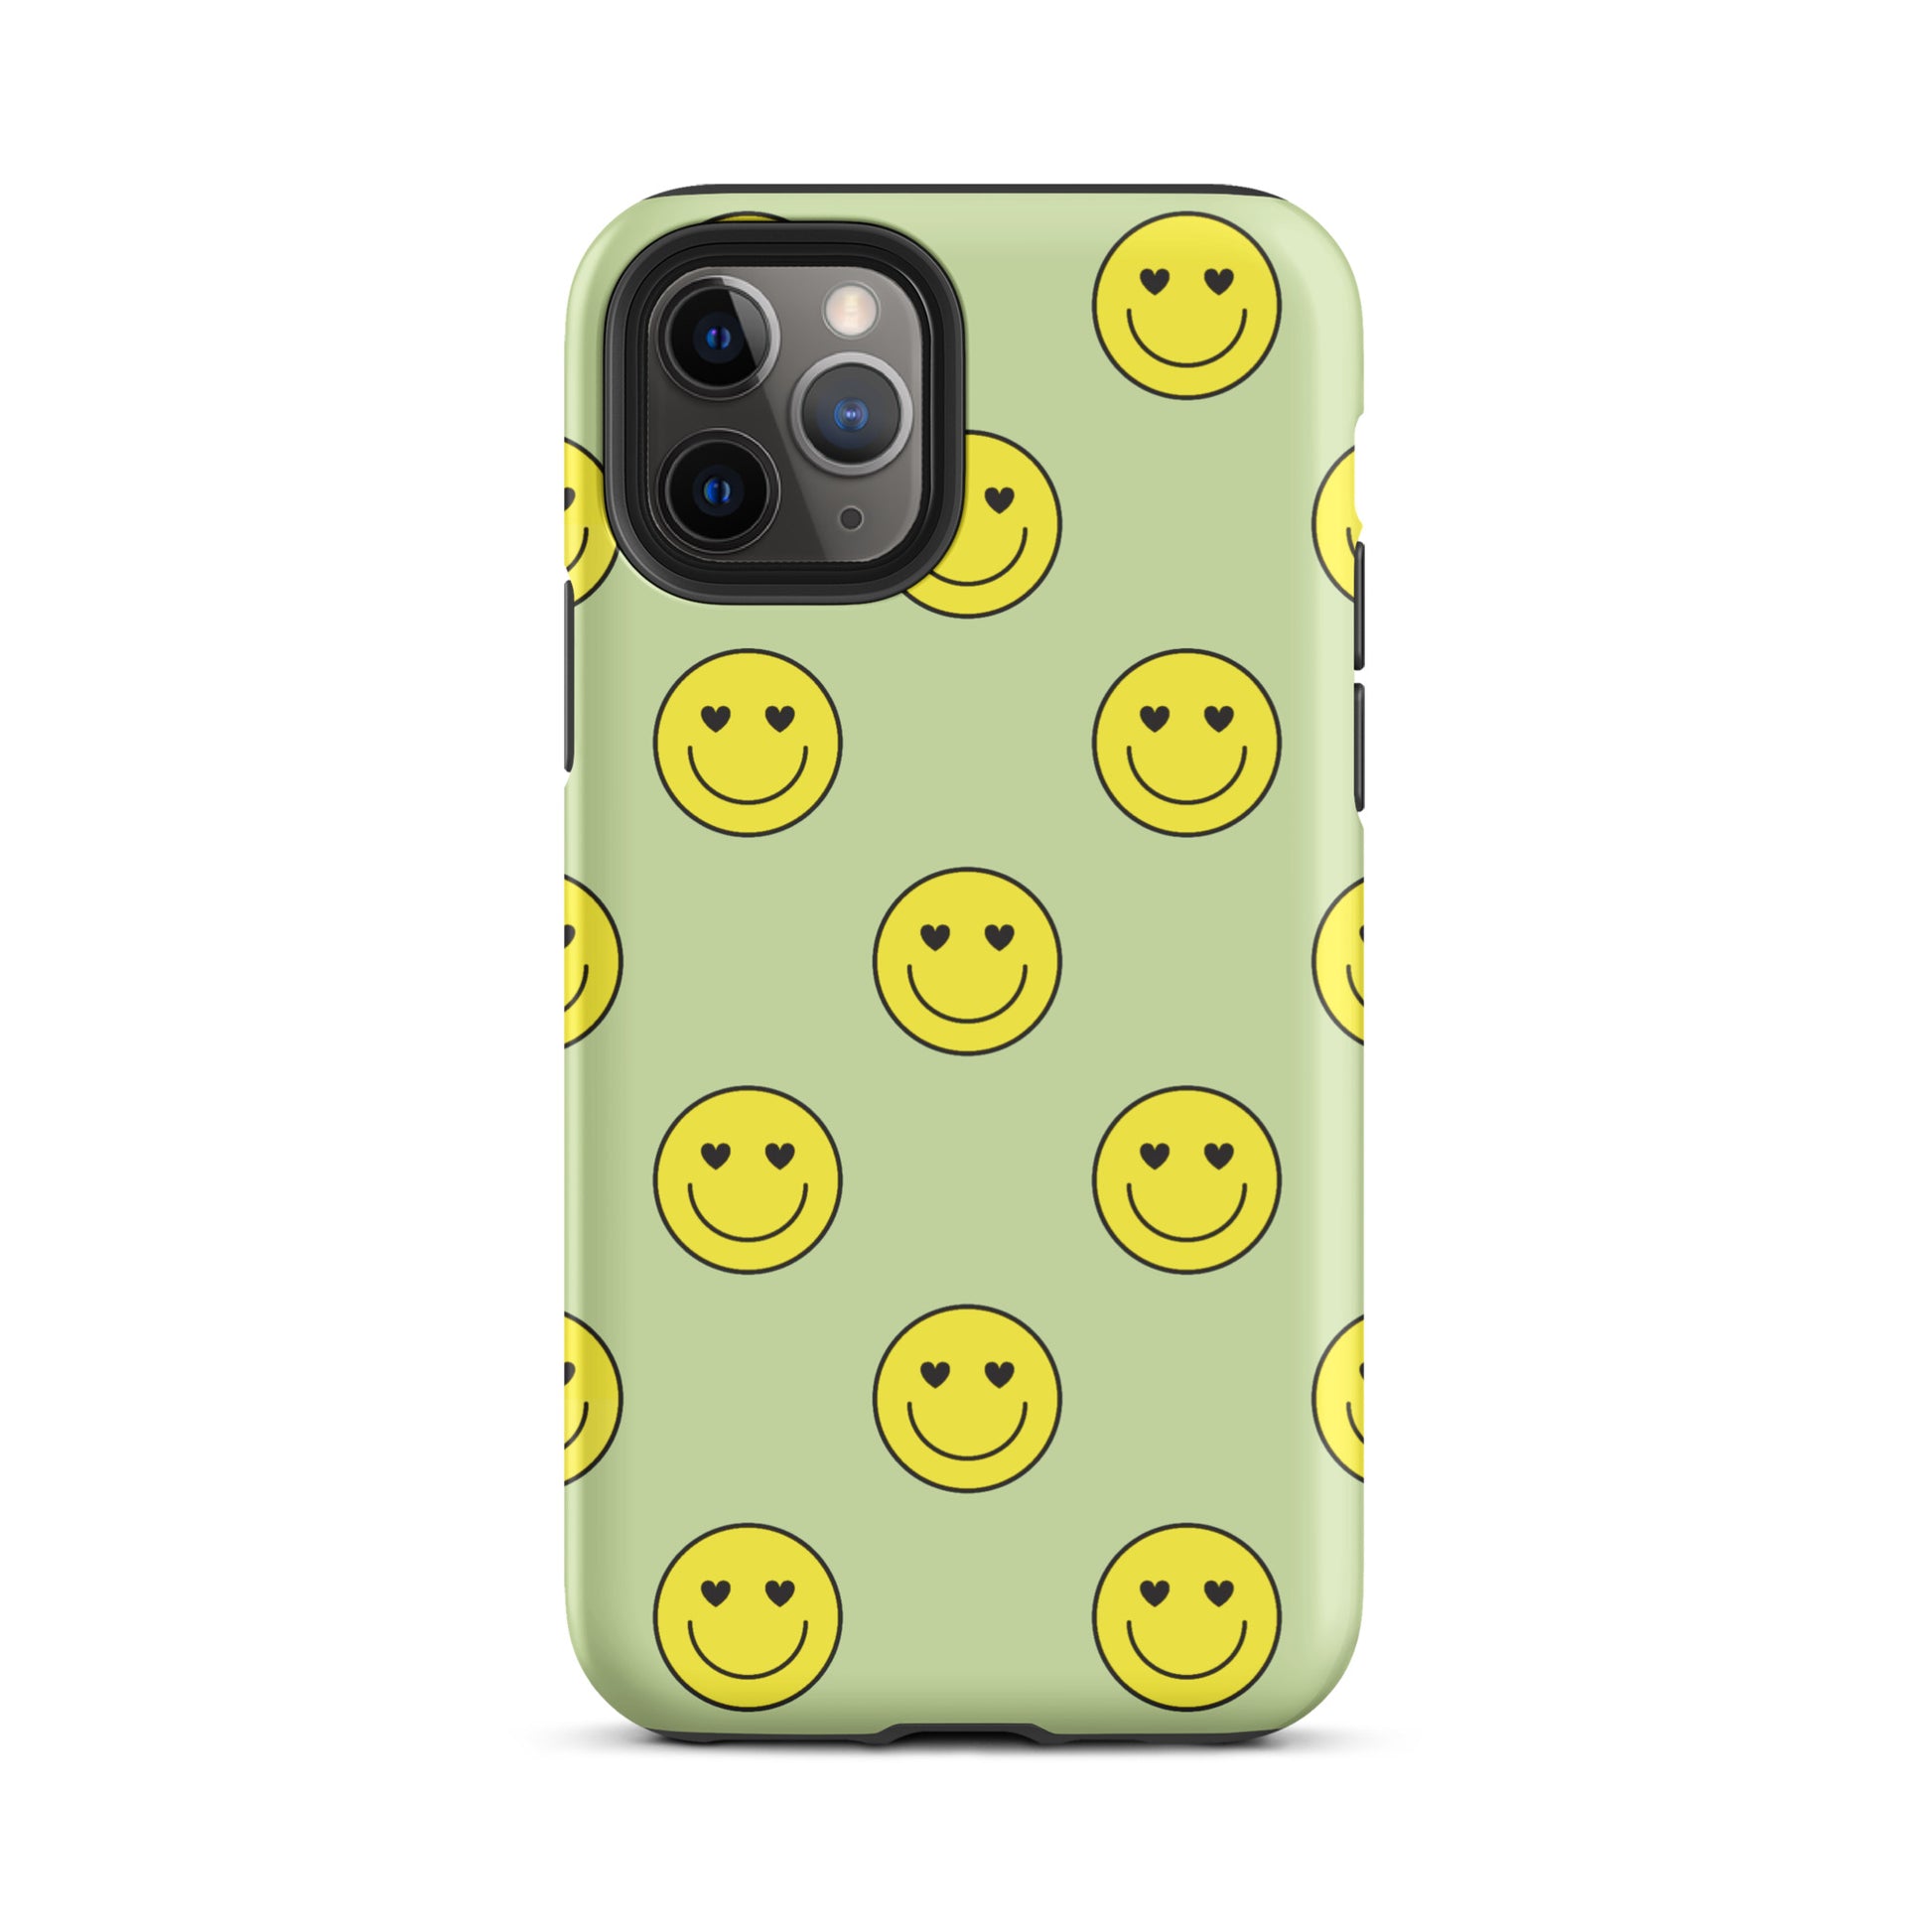 Neon Smiley Faces iPhone Case iPhone 11 Pro Matte